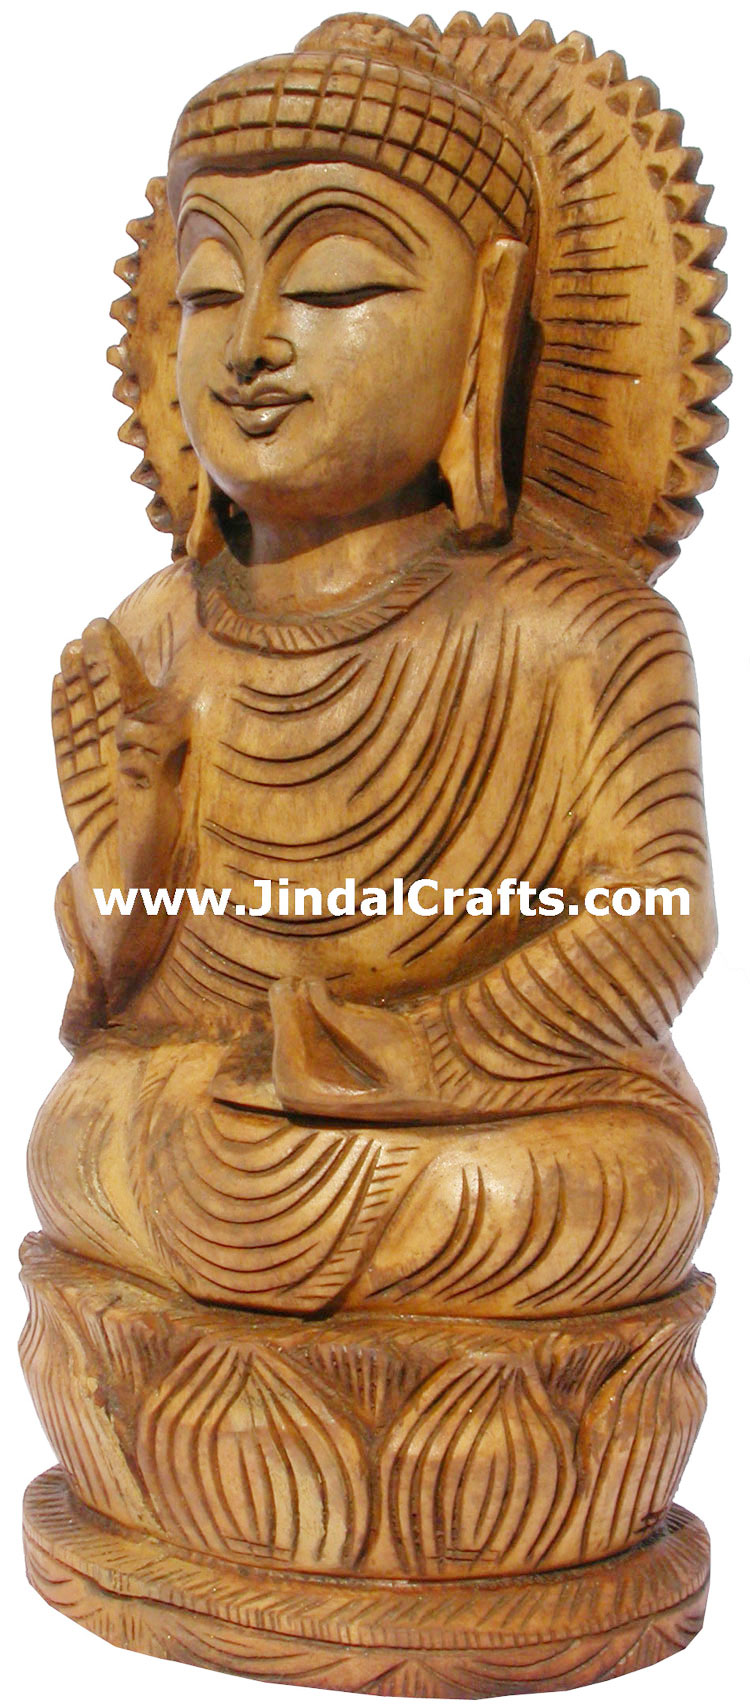 Handmade Antique Look Gautam Buddha Wood Figurine India Hand Carved Buddhism Art